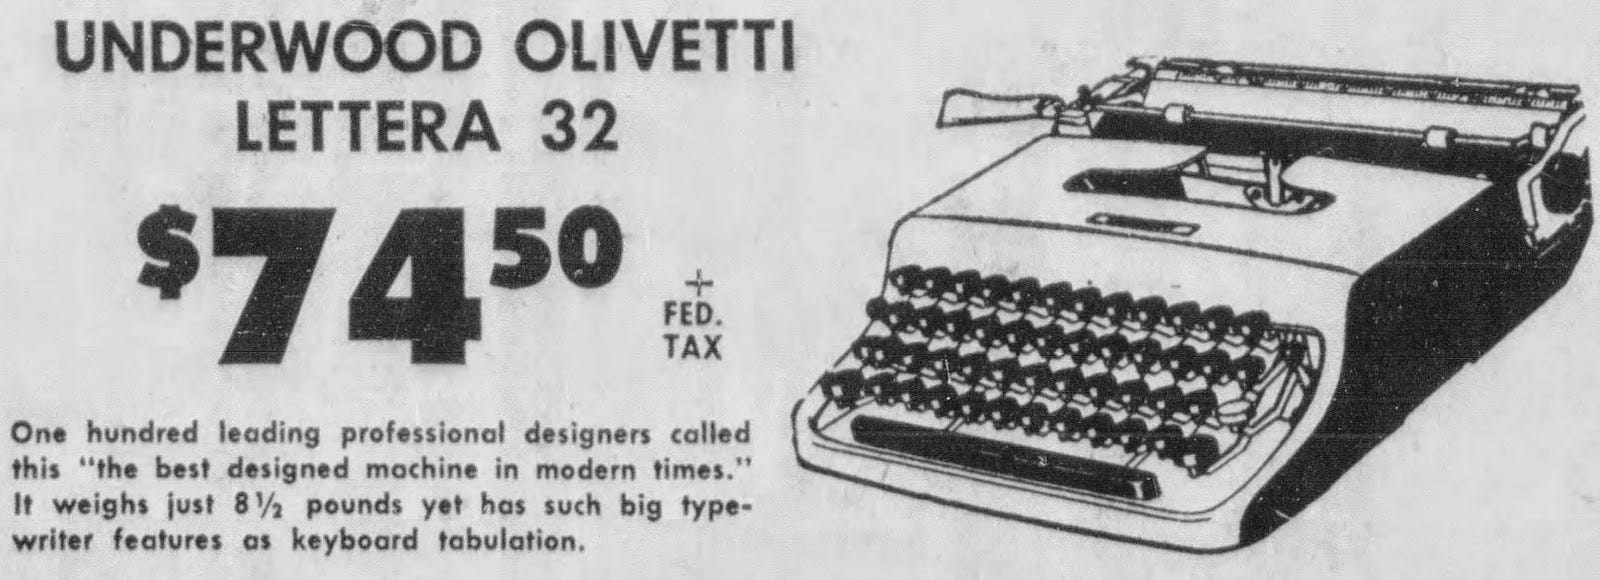 Olivetti lettera 32 serial number